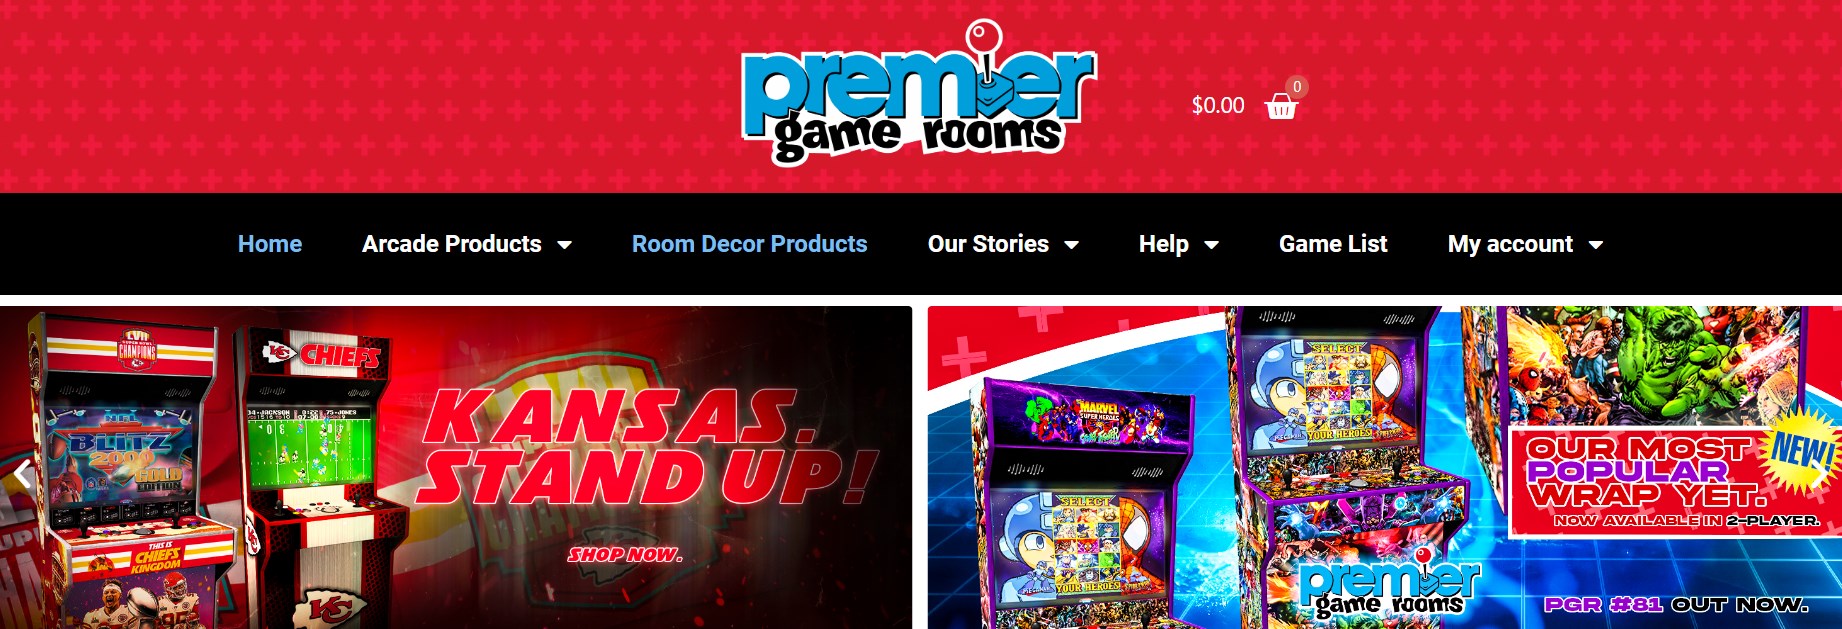 Premier game rooms BALL DROPPER ARCADE GAME manufacturer brands